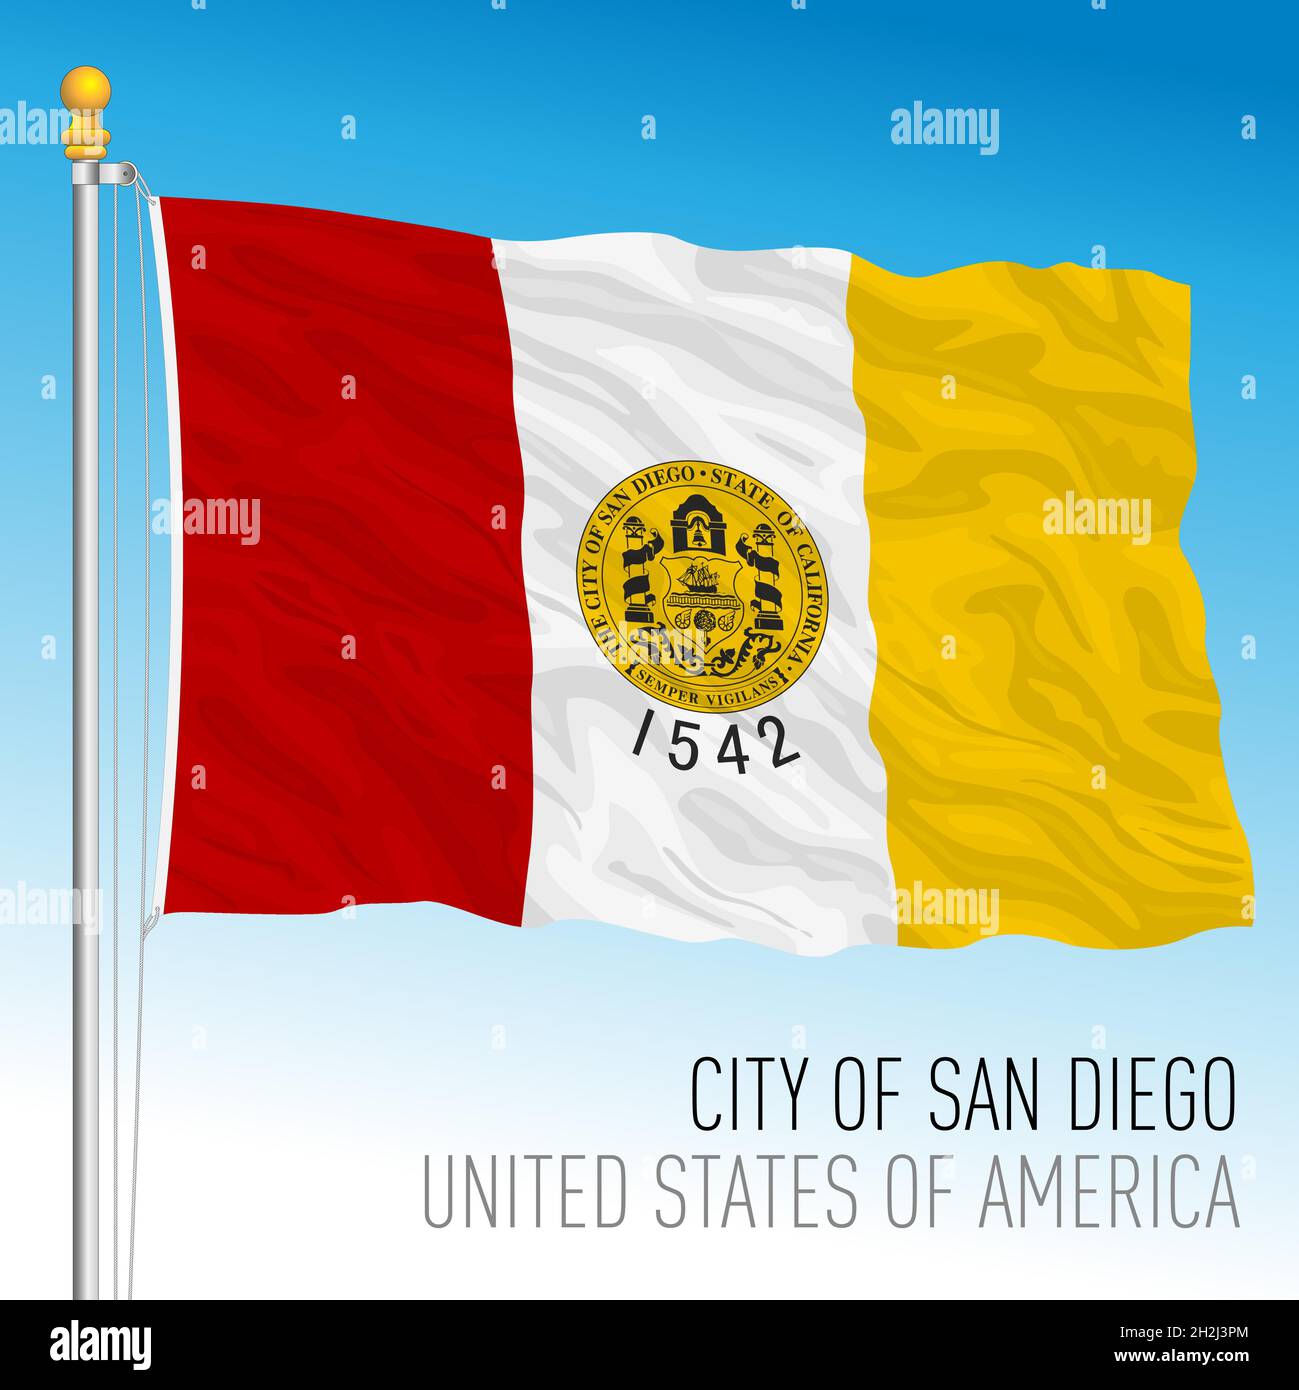 City of San Diego flag, California, United States, vector illustration Stock Vector